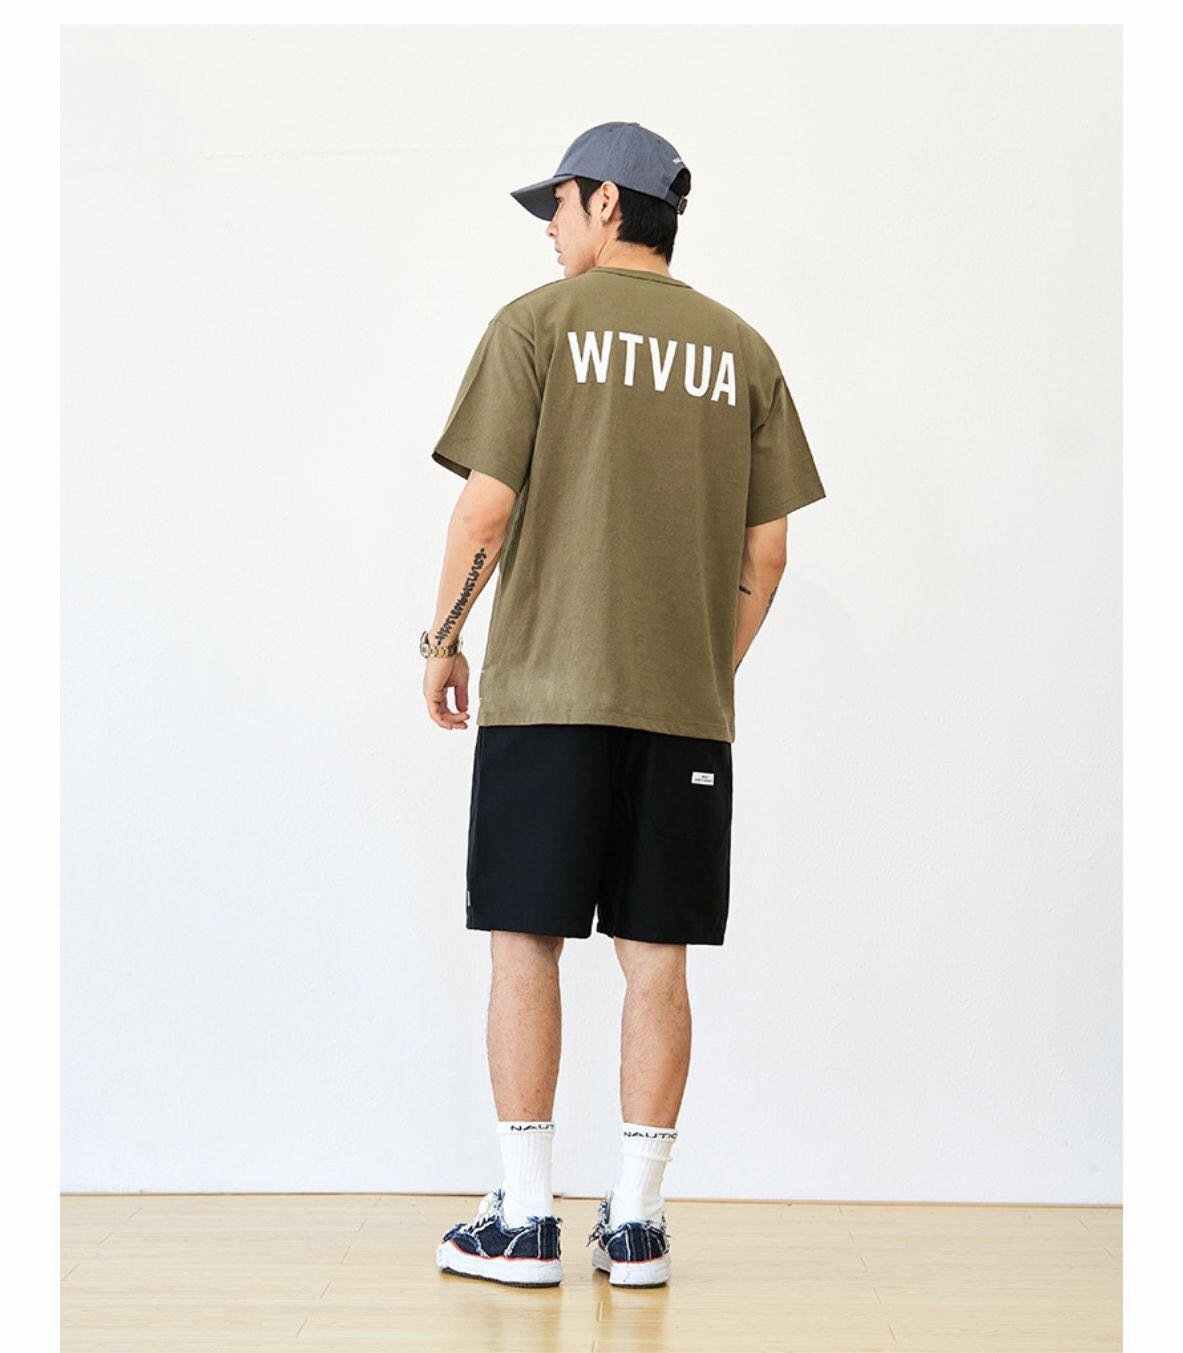 希望商店】 WTAPS BANNER / SS / COTTON 21SS 雙面WTVUA LOGO 短袖T恤 